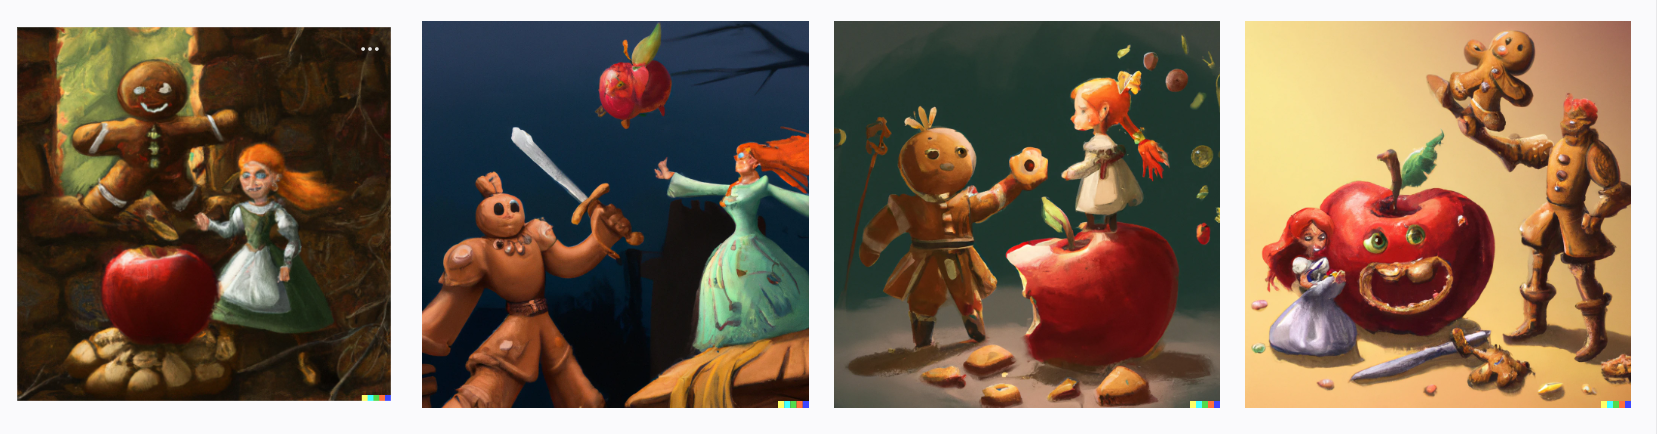 Gingerbread man saves the apple princess, digital art